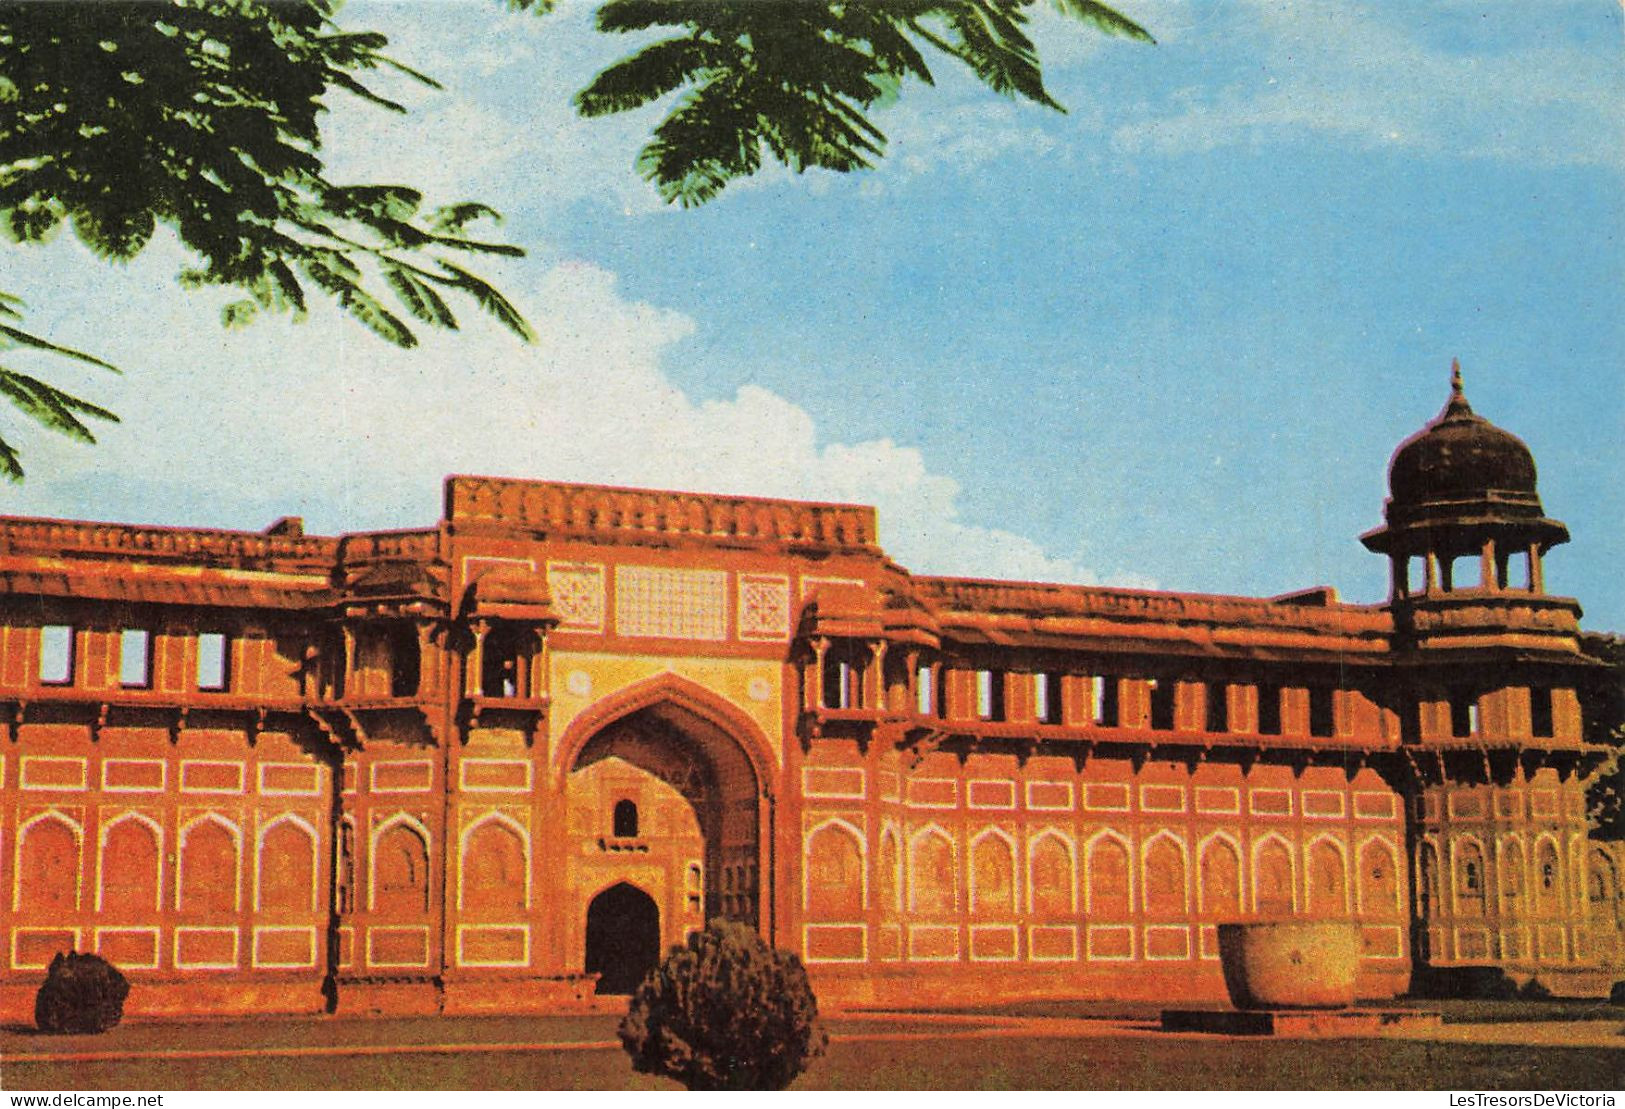 INDE - Jahangiri Mahal - Agra Fort - Vue Face à L'entrée - Vue Générale - Carte Postale - Inde